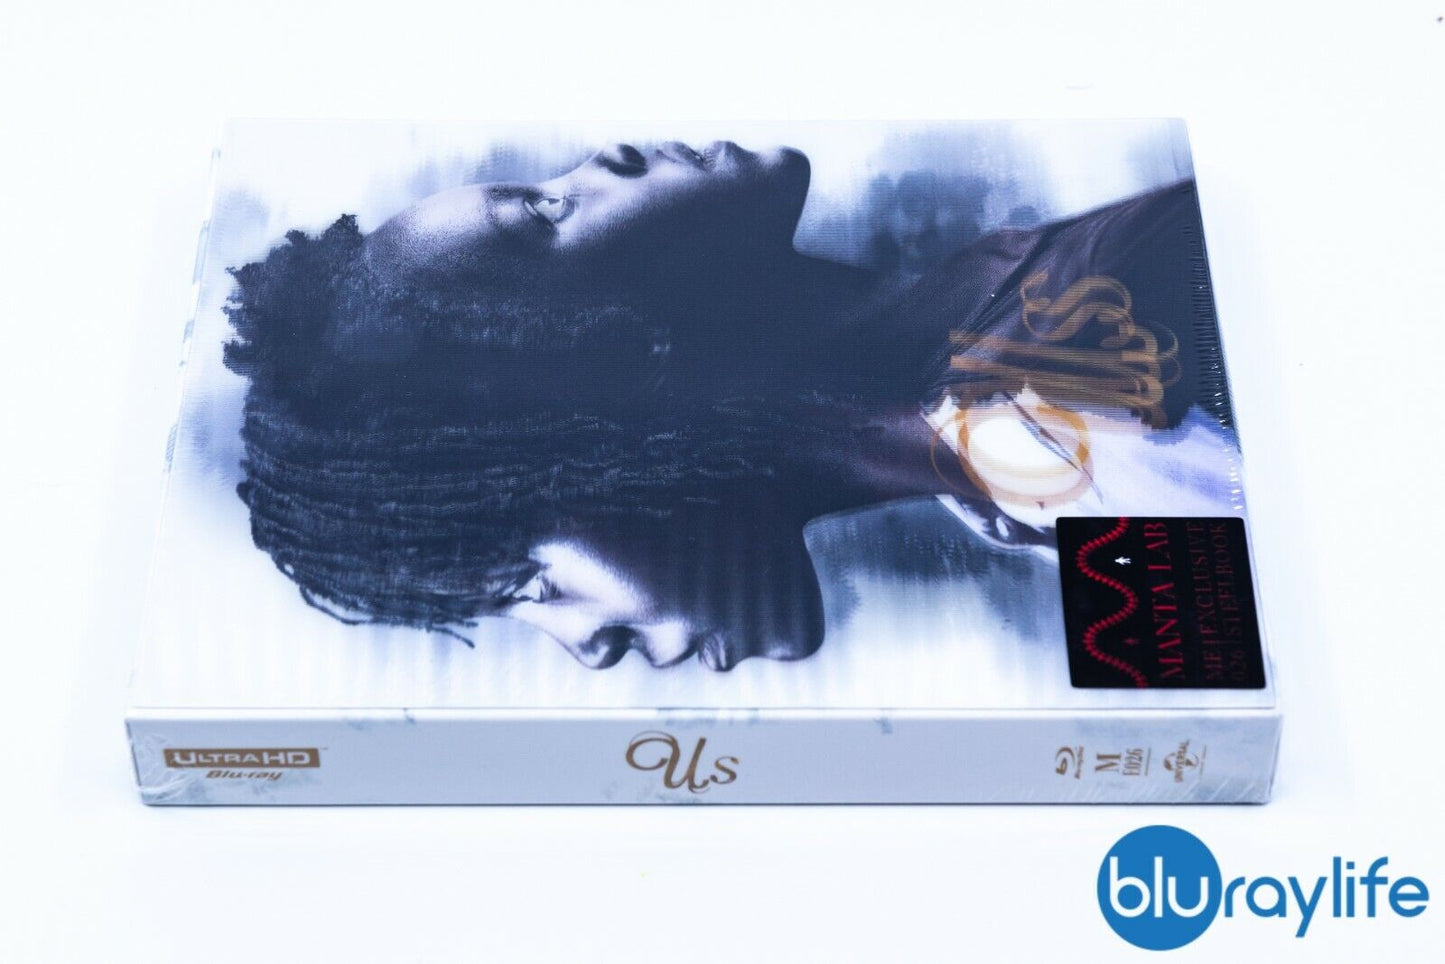 Us 4K Blu-ray Steelbook Manta Lab Exclusive ME#26 Lenticular Slip A